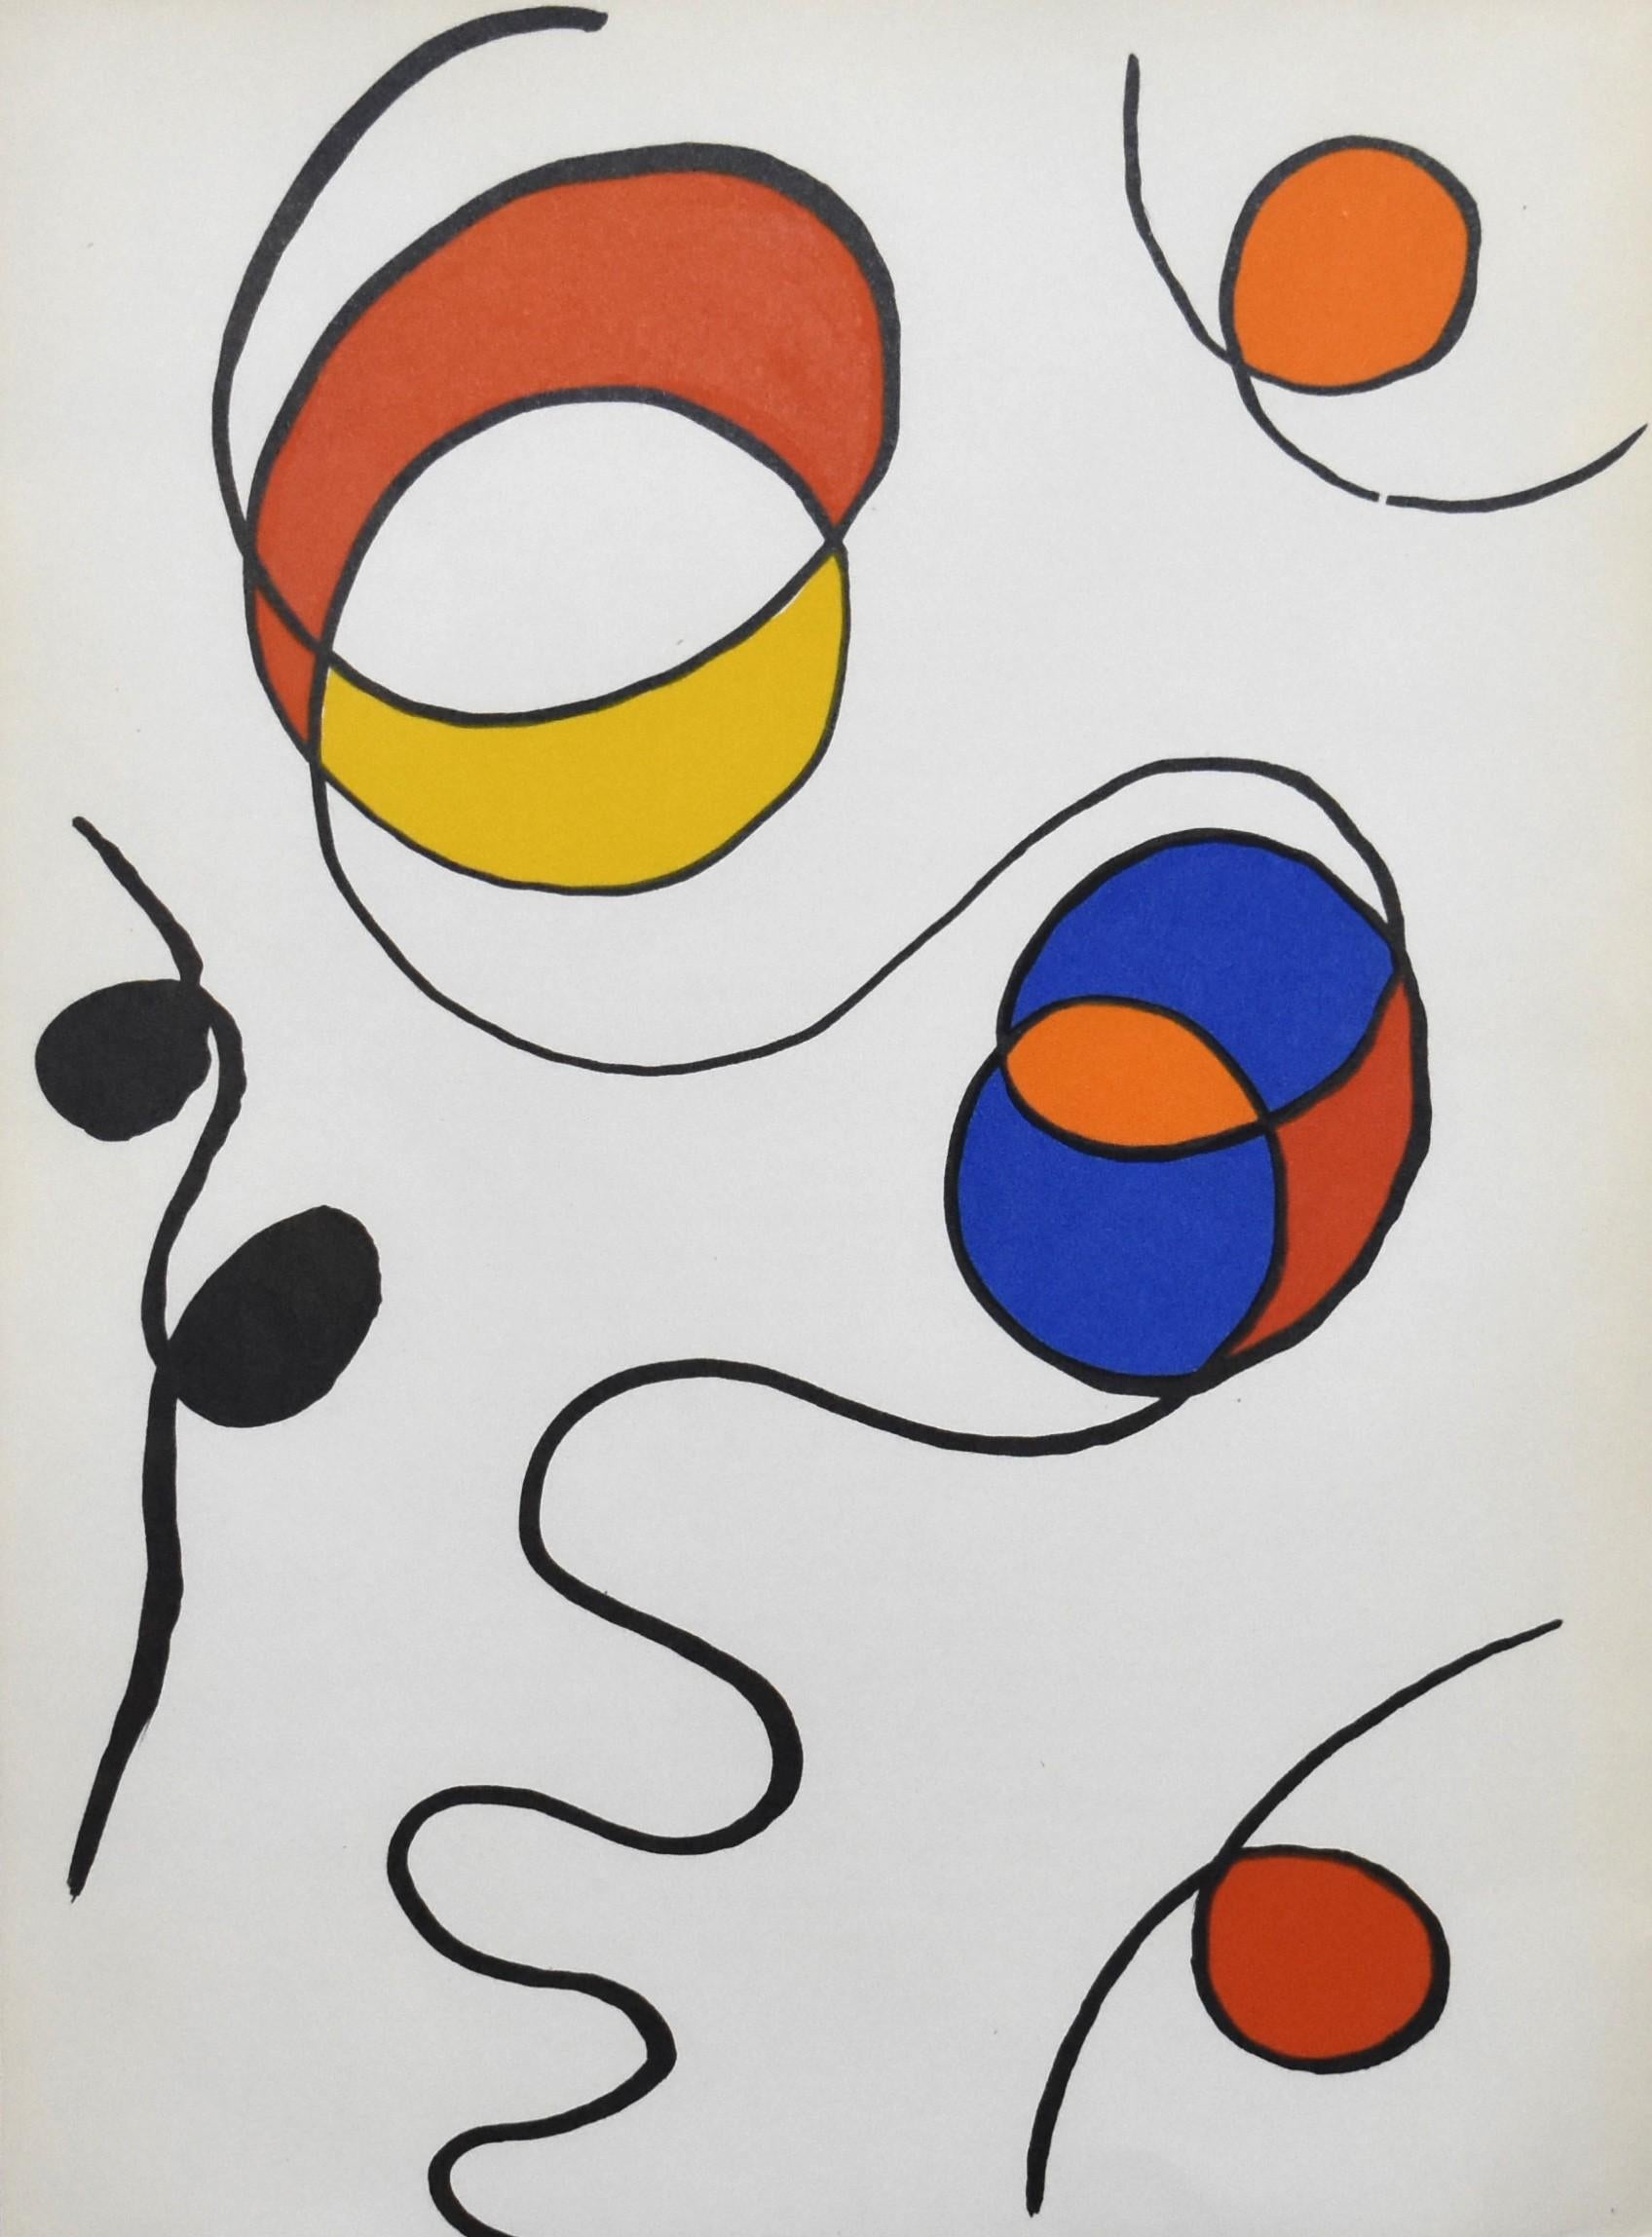 Where is Alexander Calder’s art?